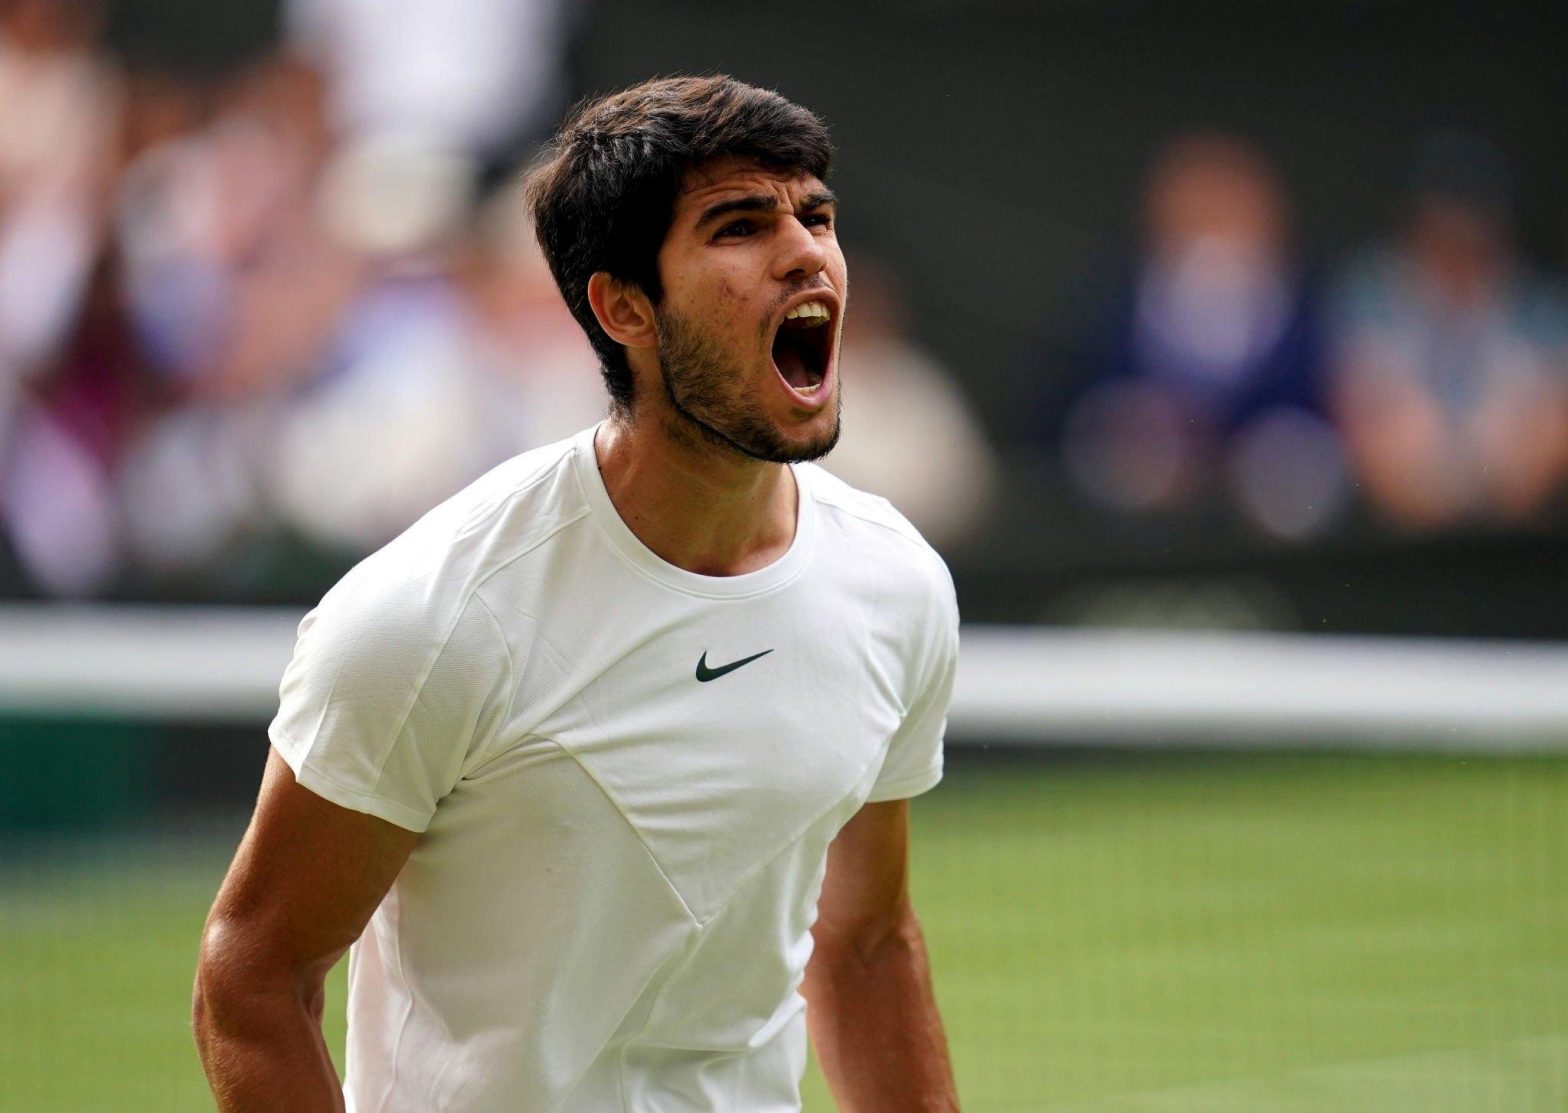 Carlos Alcaraz’s Wimbledon win fires fresh chatter on GOAT, Big 3 dominance